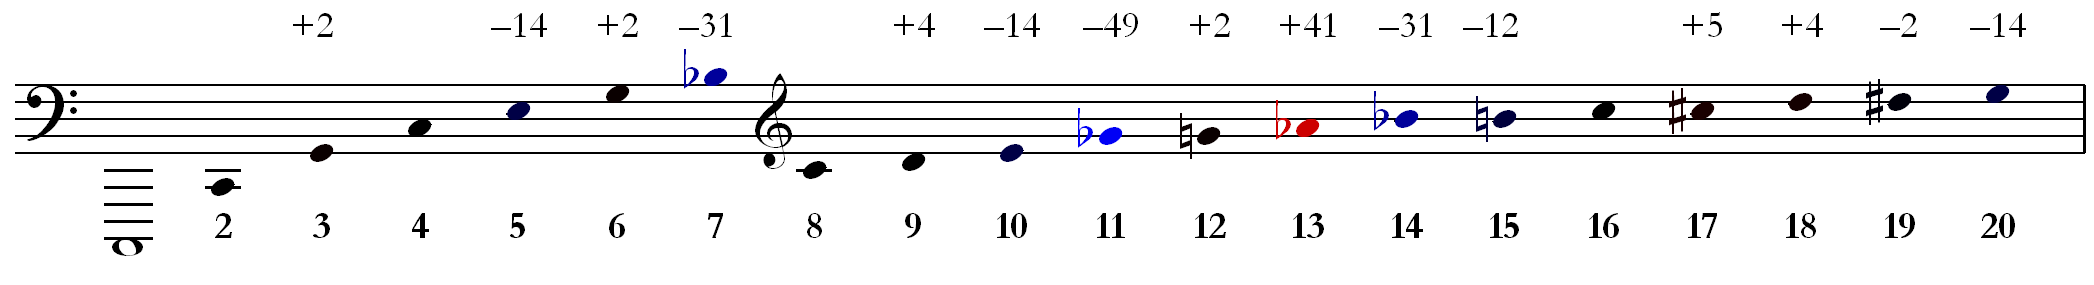 Harmonic Series.png